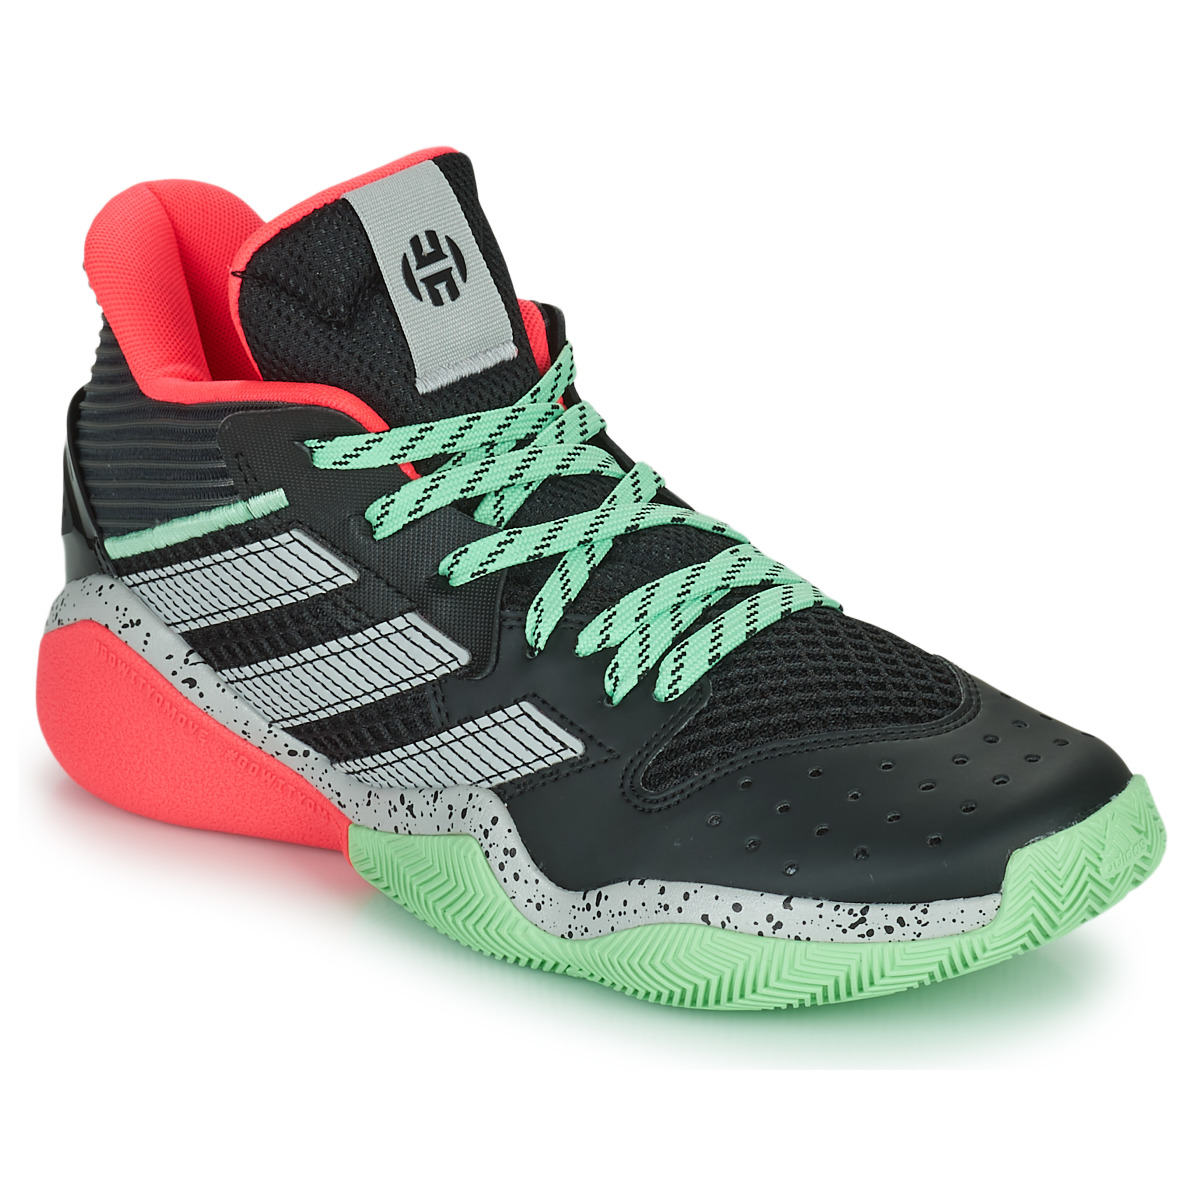 Chaussures Adidas X9000L4 Boost Mens Premium Running Shoes Gym Fitness Workout Trainers HARDEN STEPBACK Noir / Gris / vert